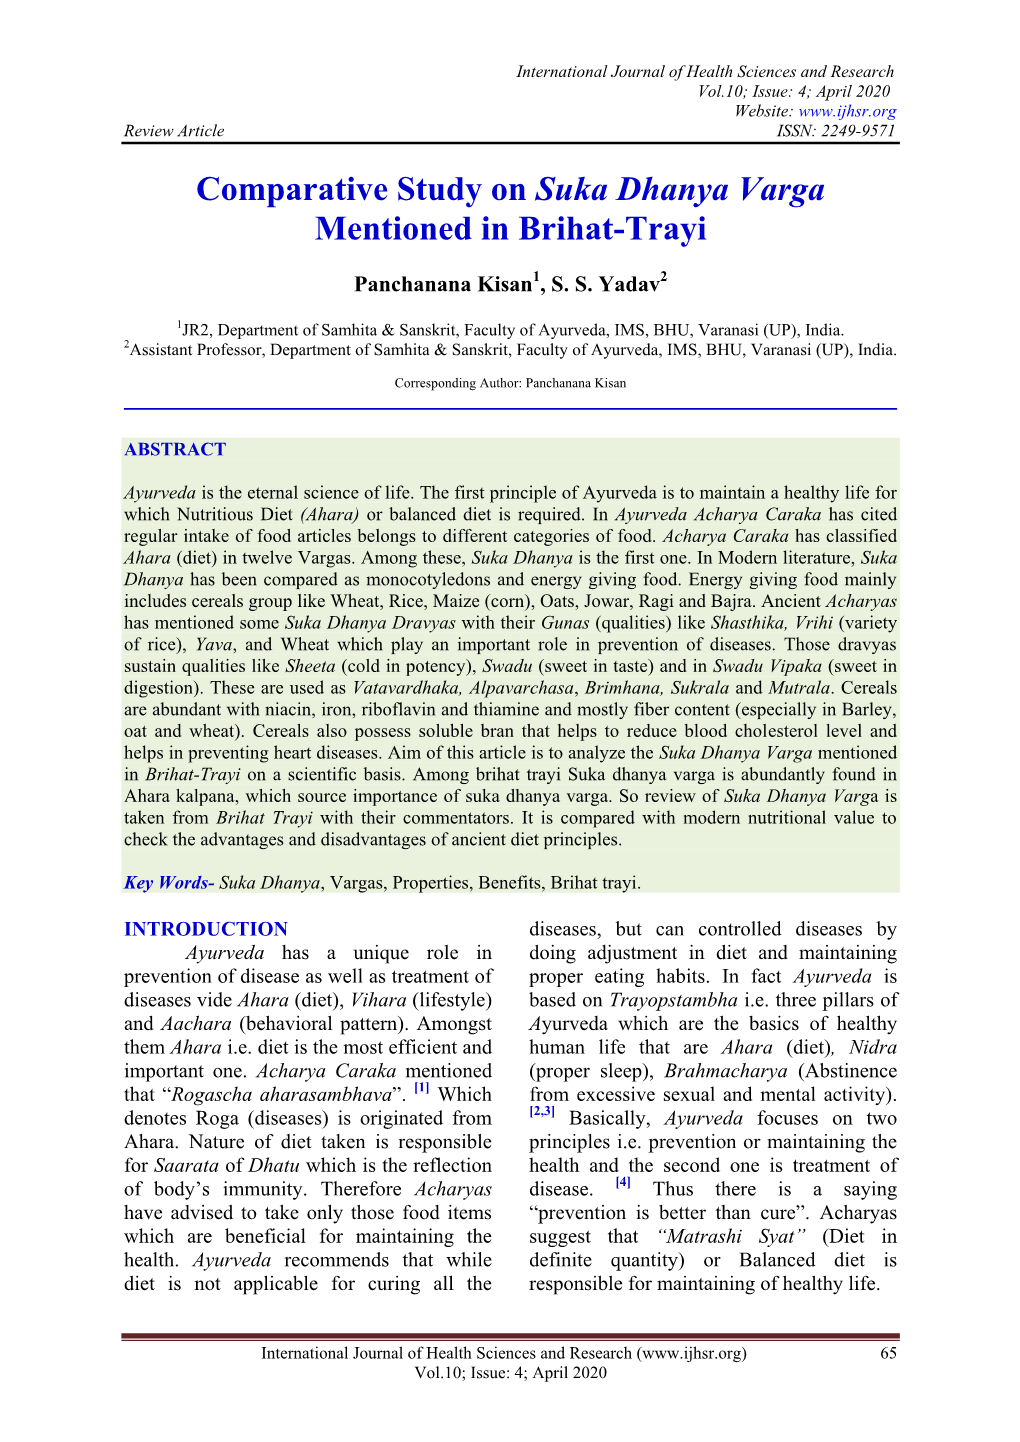 Comparative Study on Suka Dhanya Varga Mentioned in Brihat-Trayi